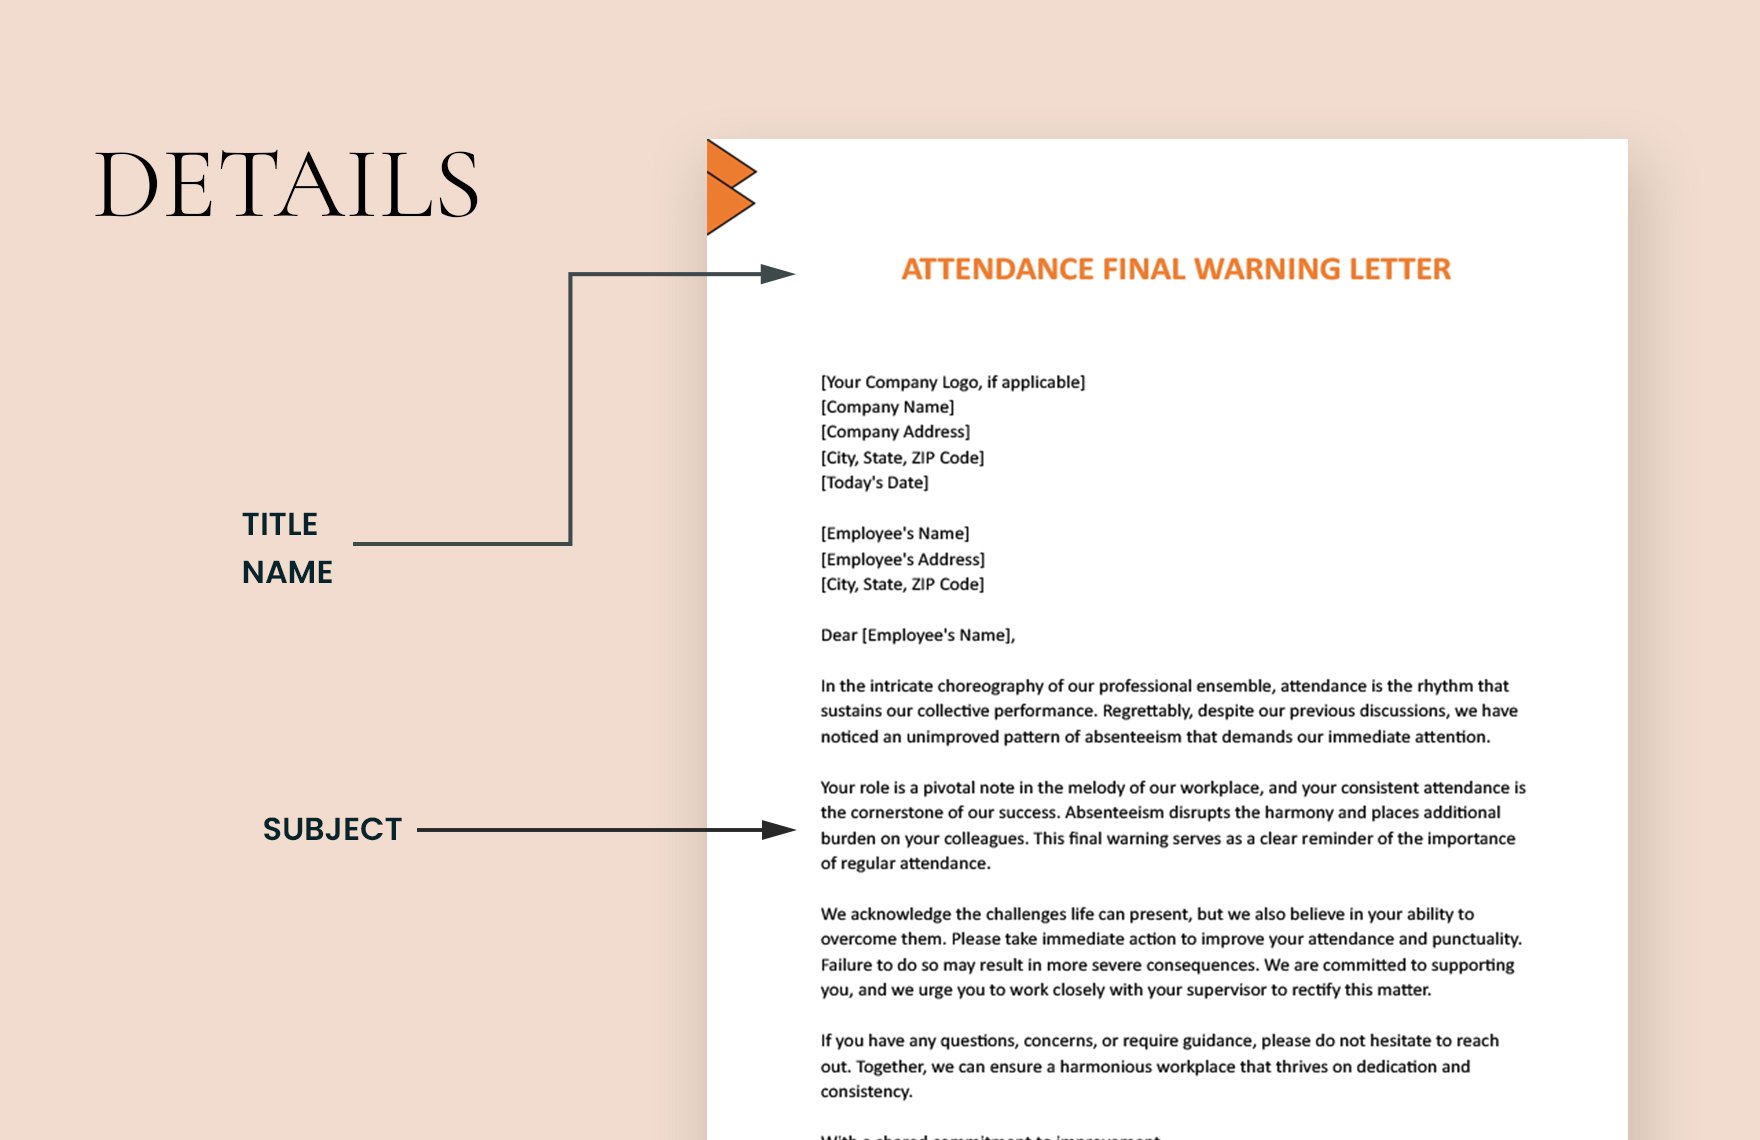 Attendance Final Warning Letter